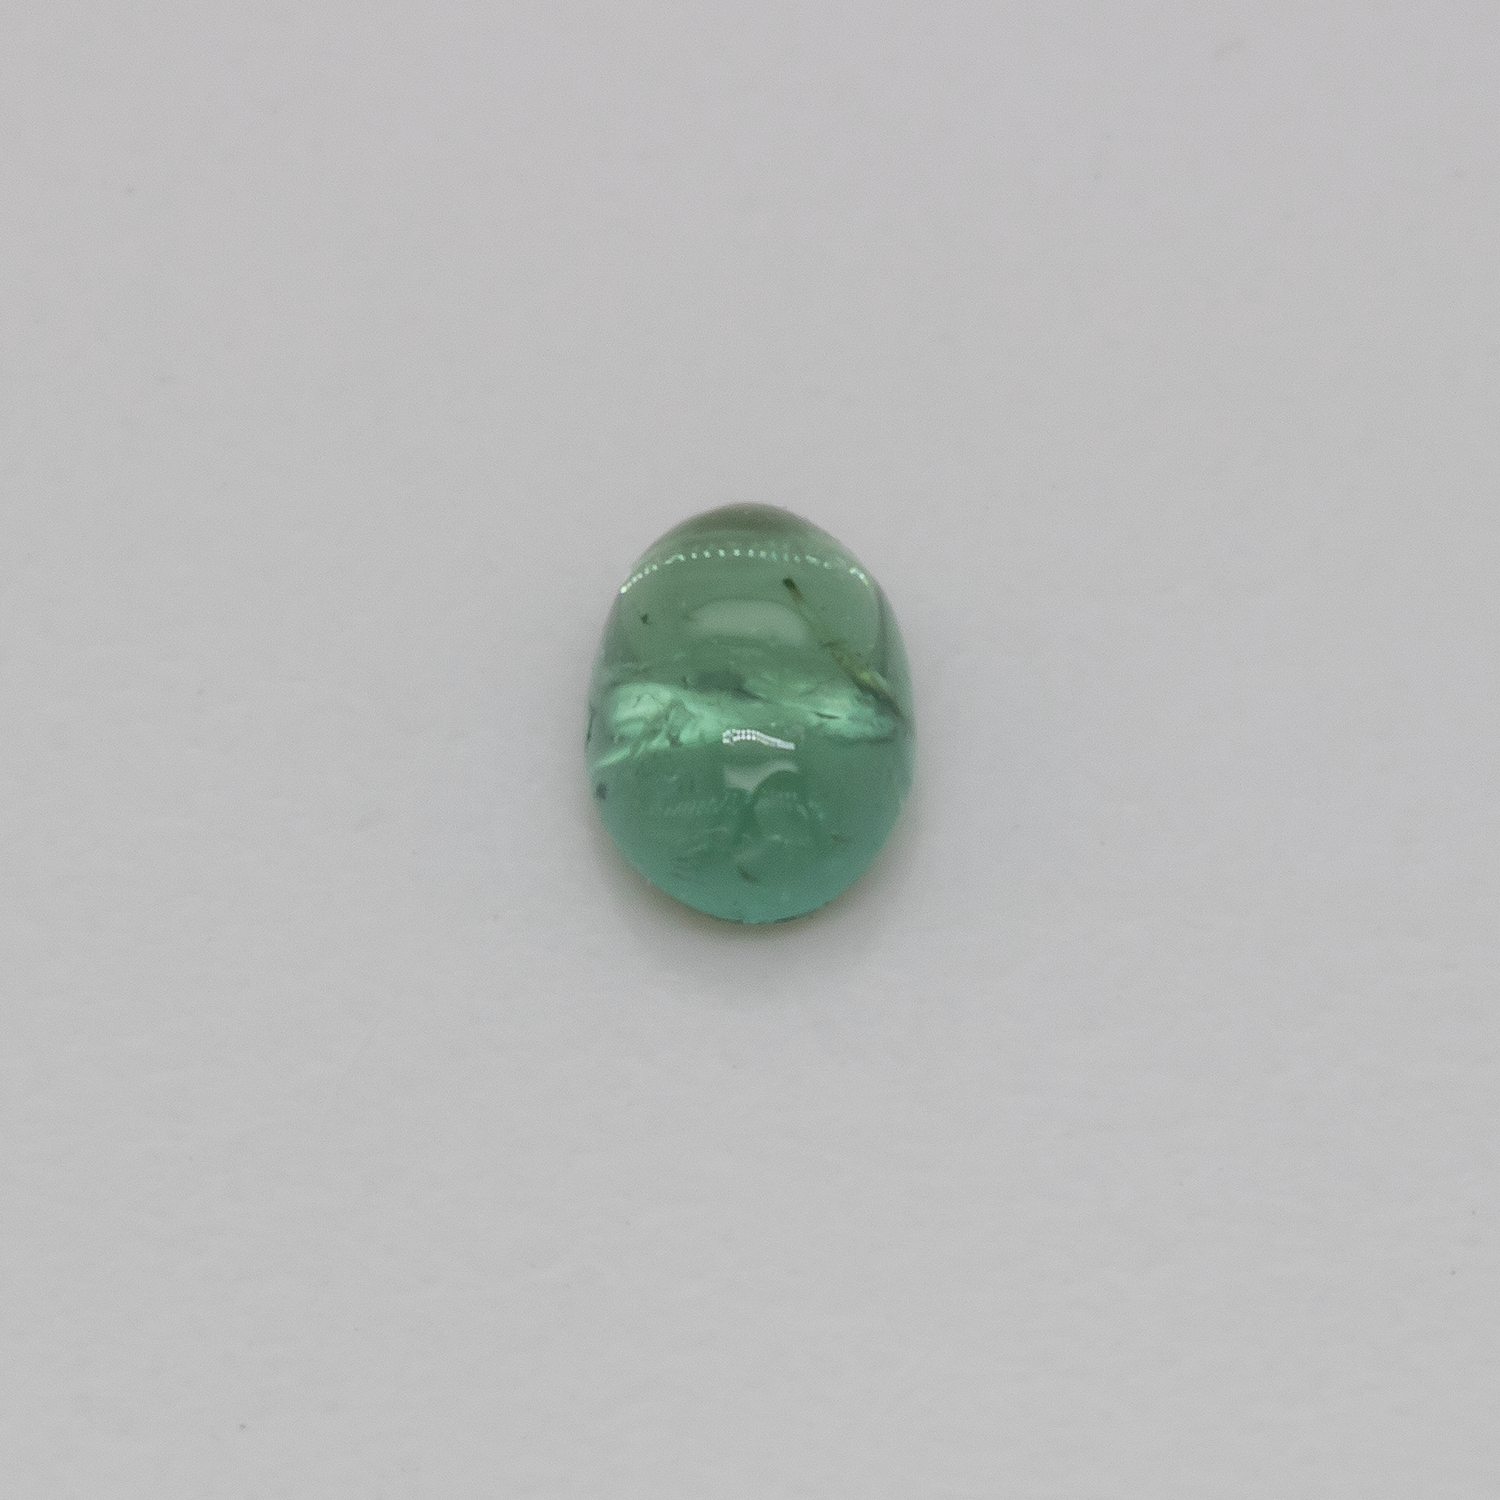 Tourmaline - green, oval, 3.8x2.5 mm, 0.13 cts, No. TR99386